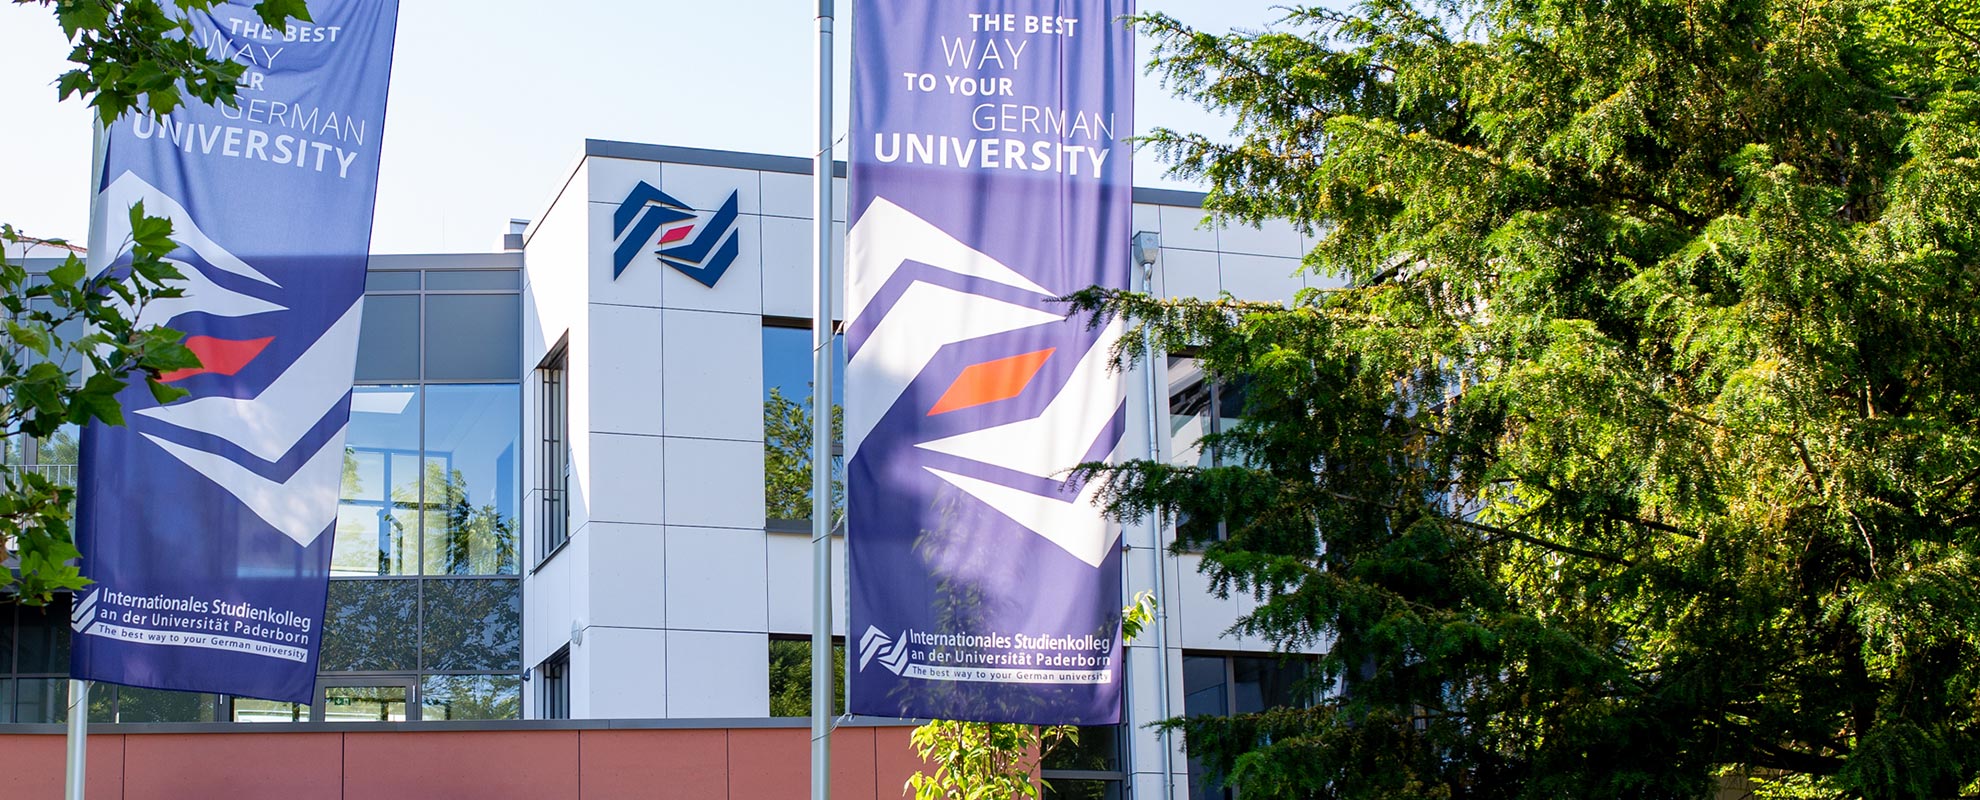 Internationales Studienkolleg an der Universität Paderborn